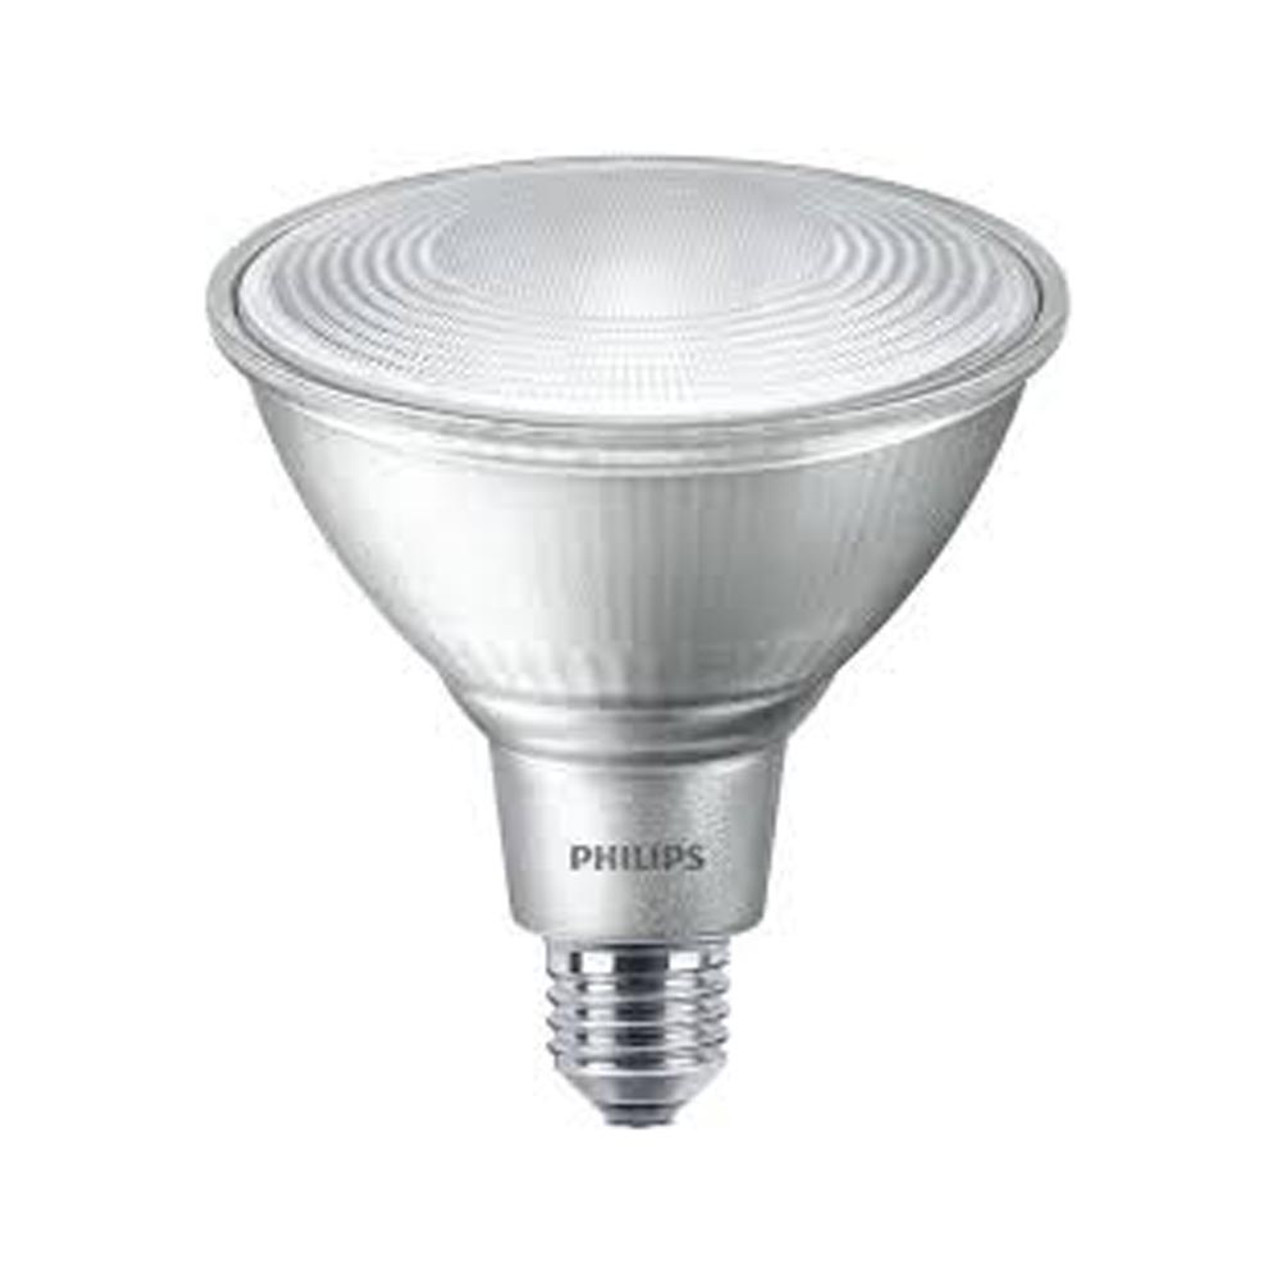 Philips MASTER LED PAR38 9W (60W) Very Warm White 25 Degrees